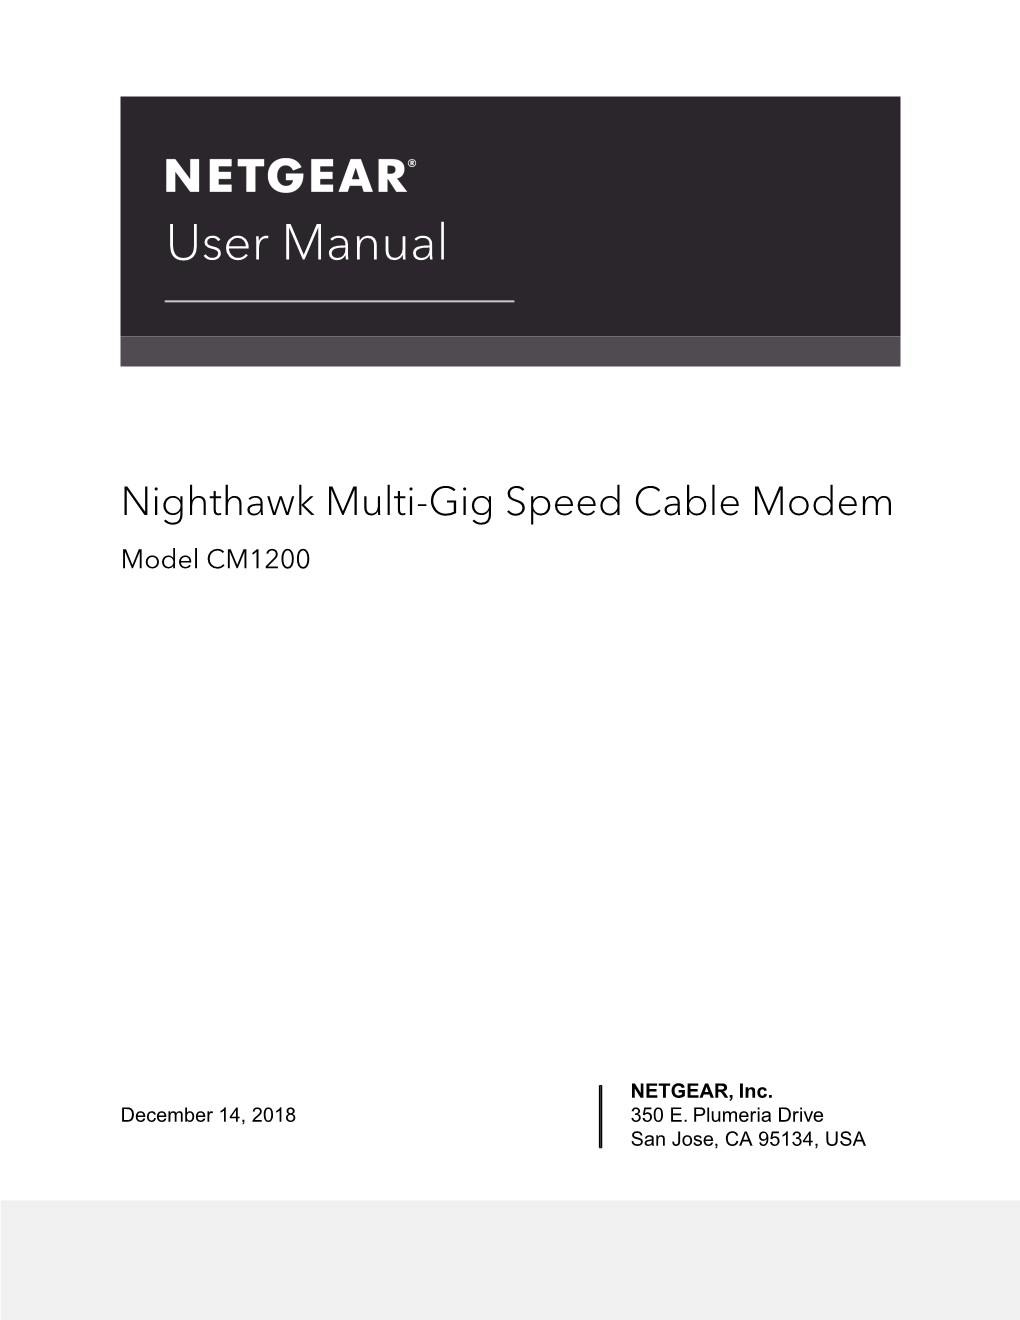 Nighthawk Multi-Gig Speed Cable Modem Model CM1200